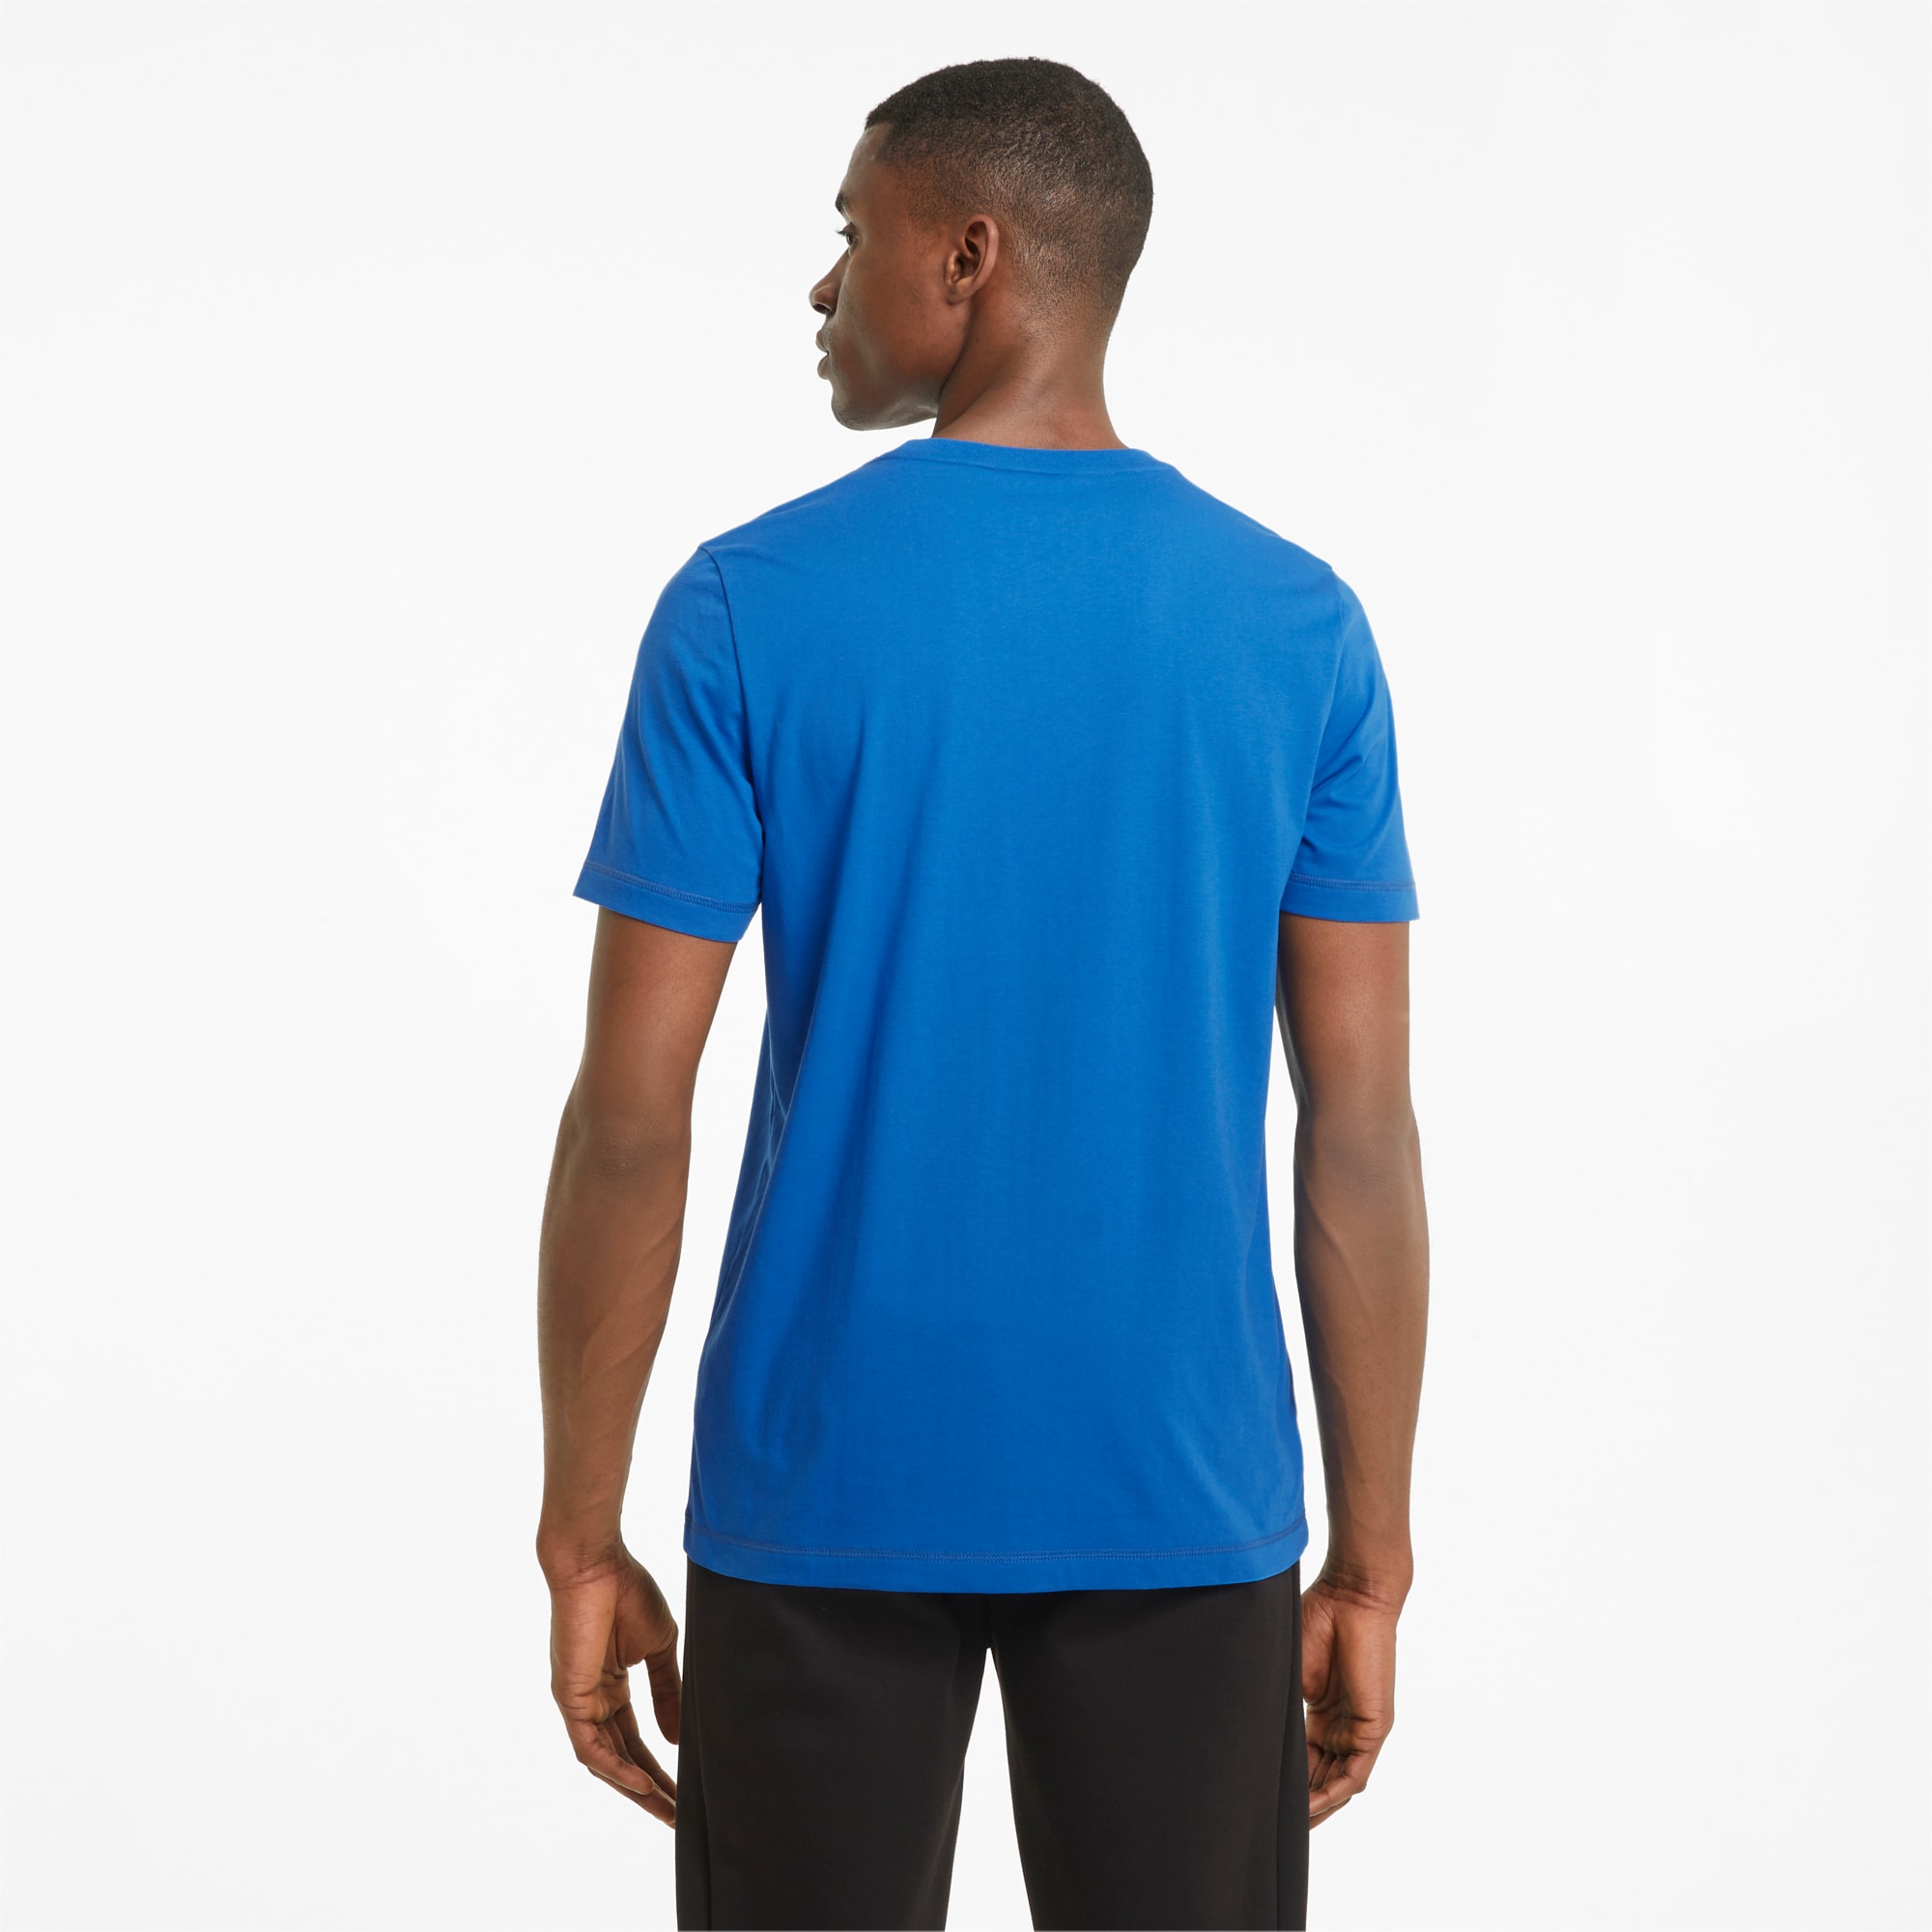 PUMA Active Soft Men's T-Shirt, Royal Blue, Size 3XL, Clothing